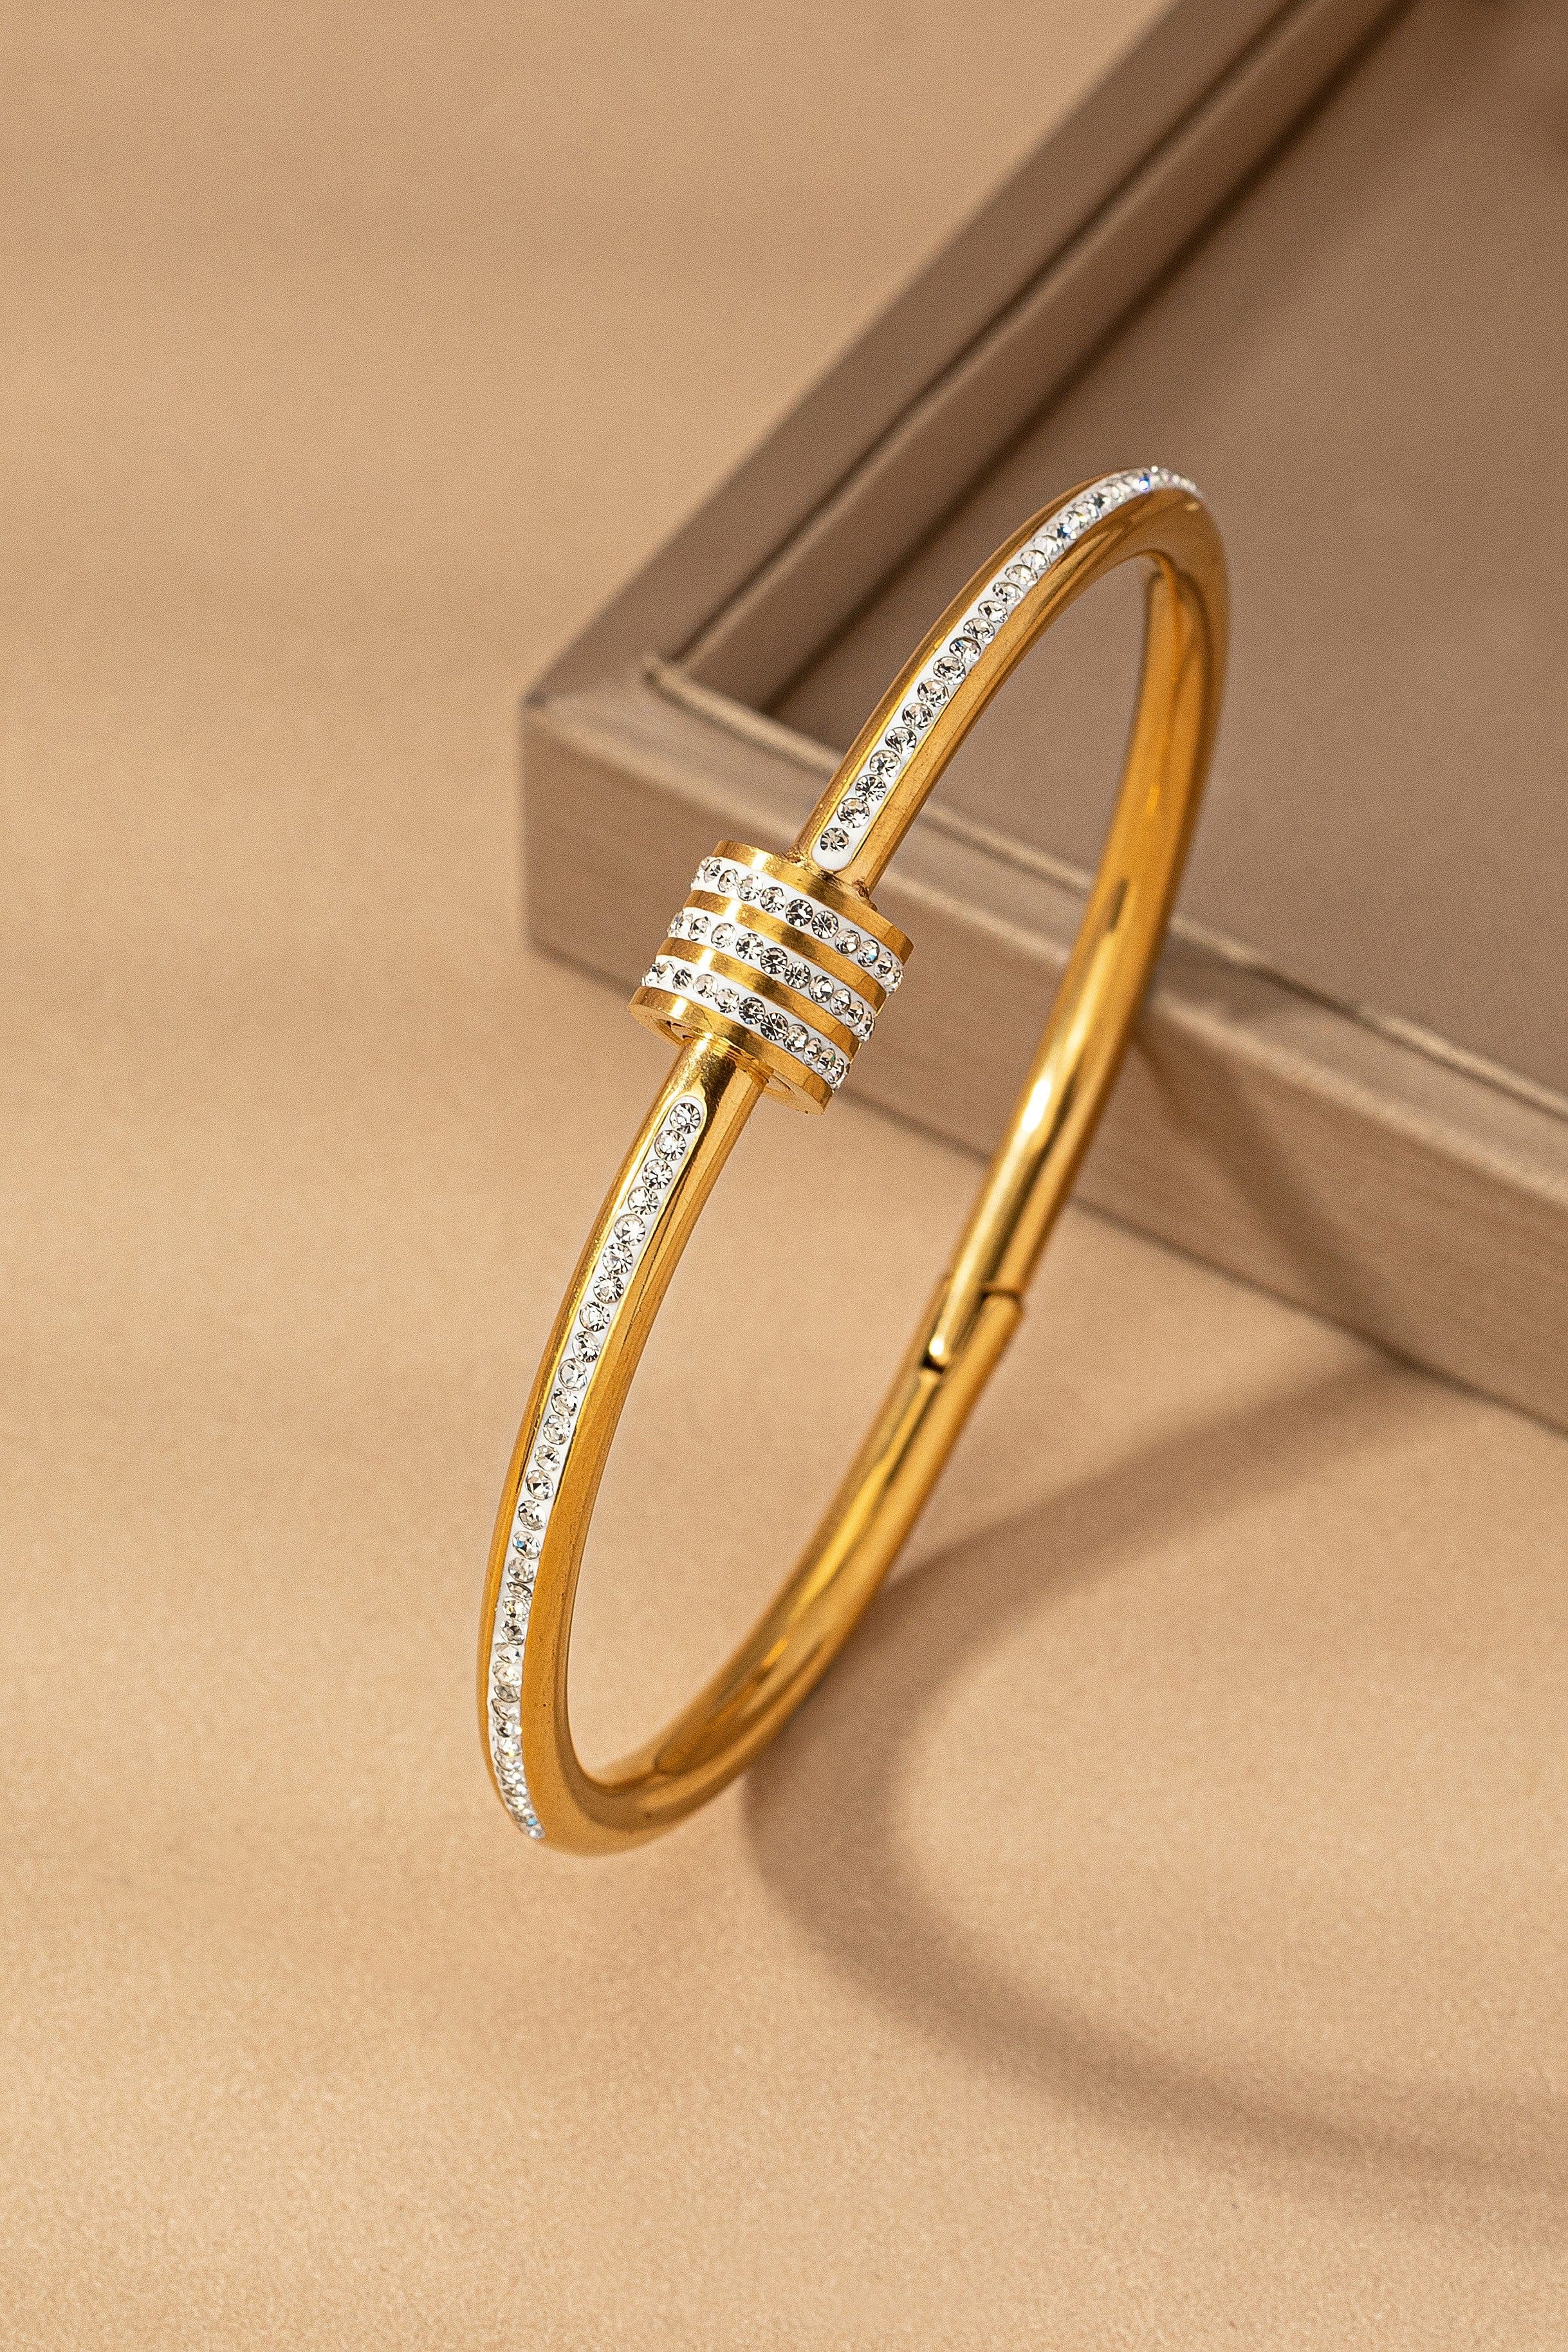 LA3accessories Jewelry - Bracelets Waterproof Stainless CZ Bangle In Gold 70176758